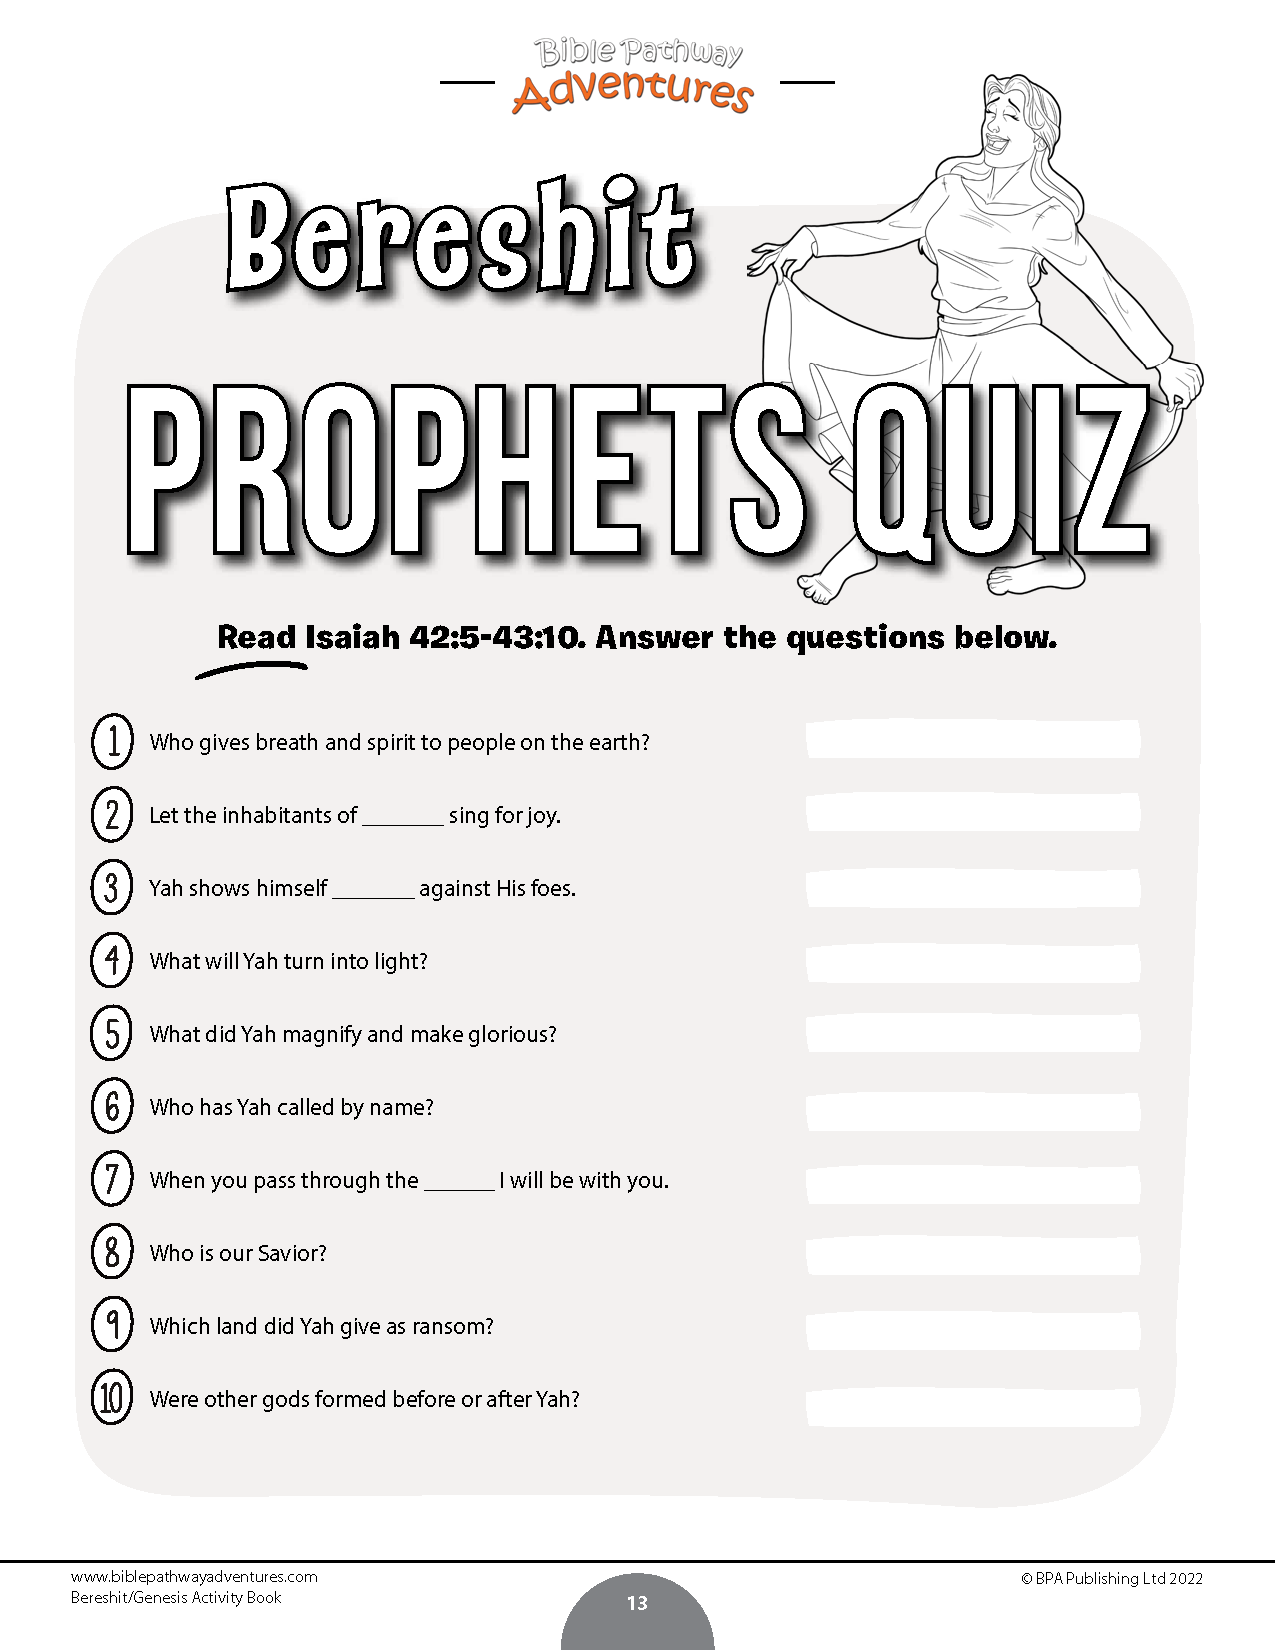 Bereshit / Genesis Torah Portion Activity Book (PDF)